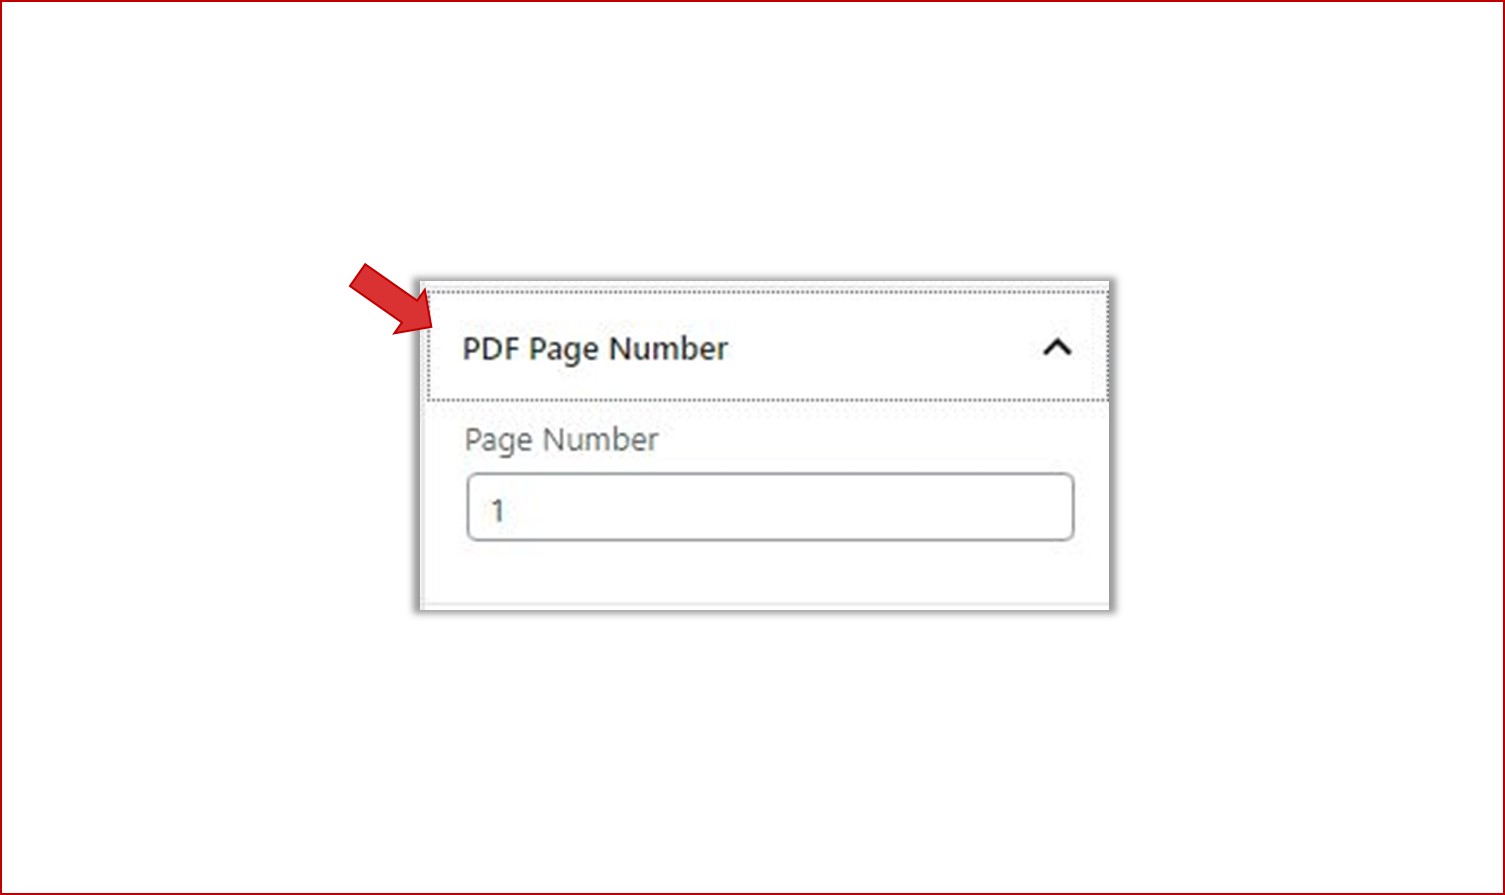 Setting default PDF page number